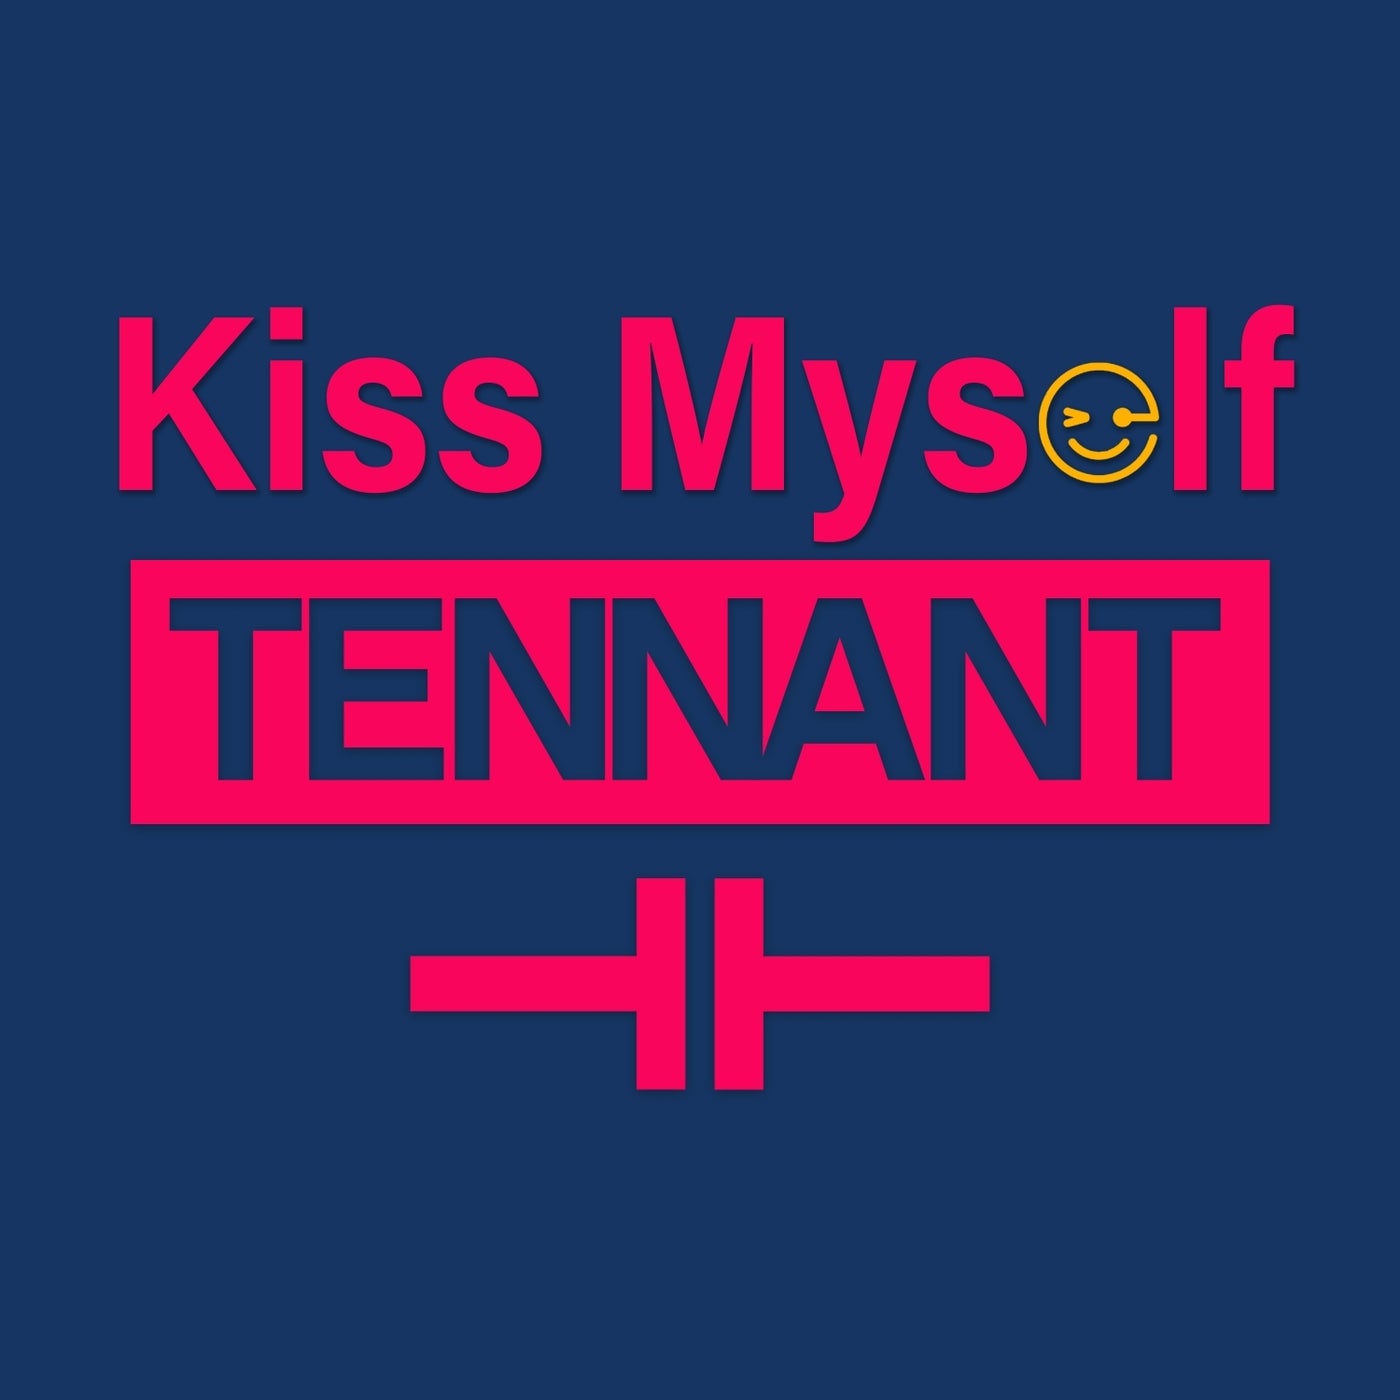 Tennant – Kiss Myself [SSM001]